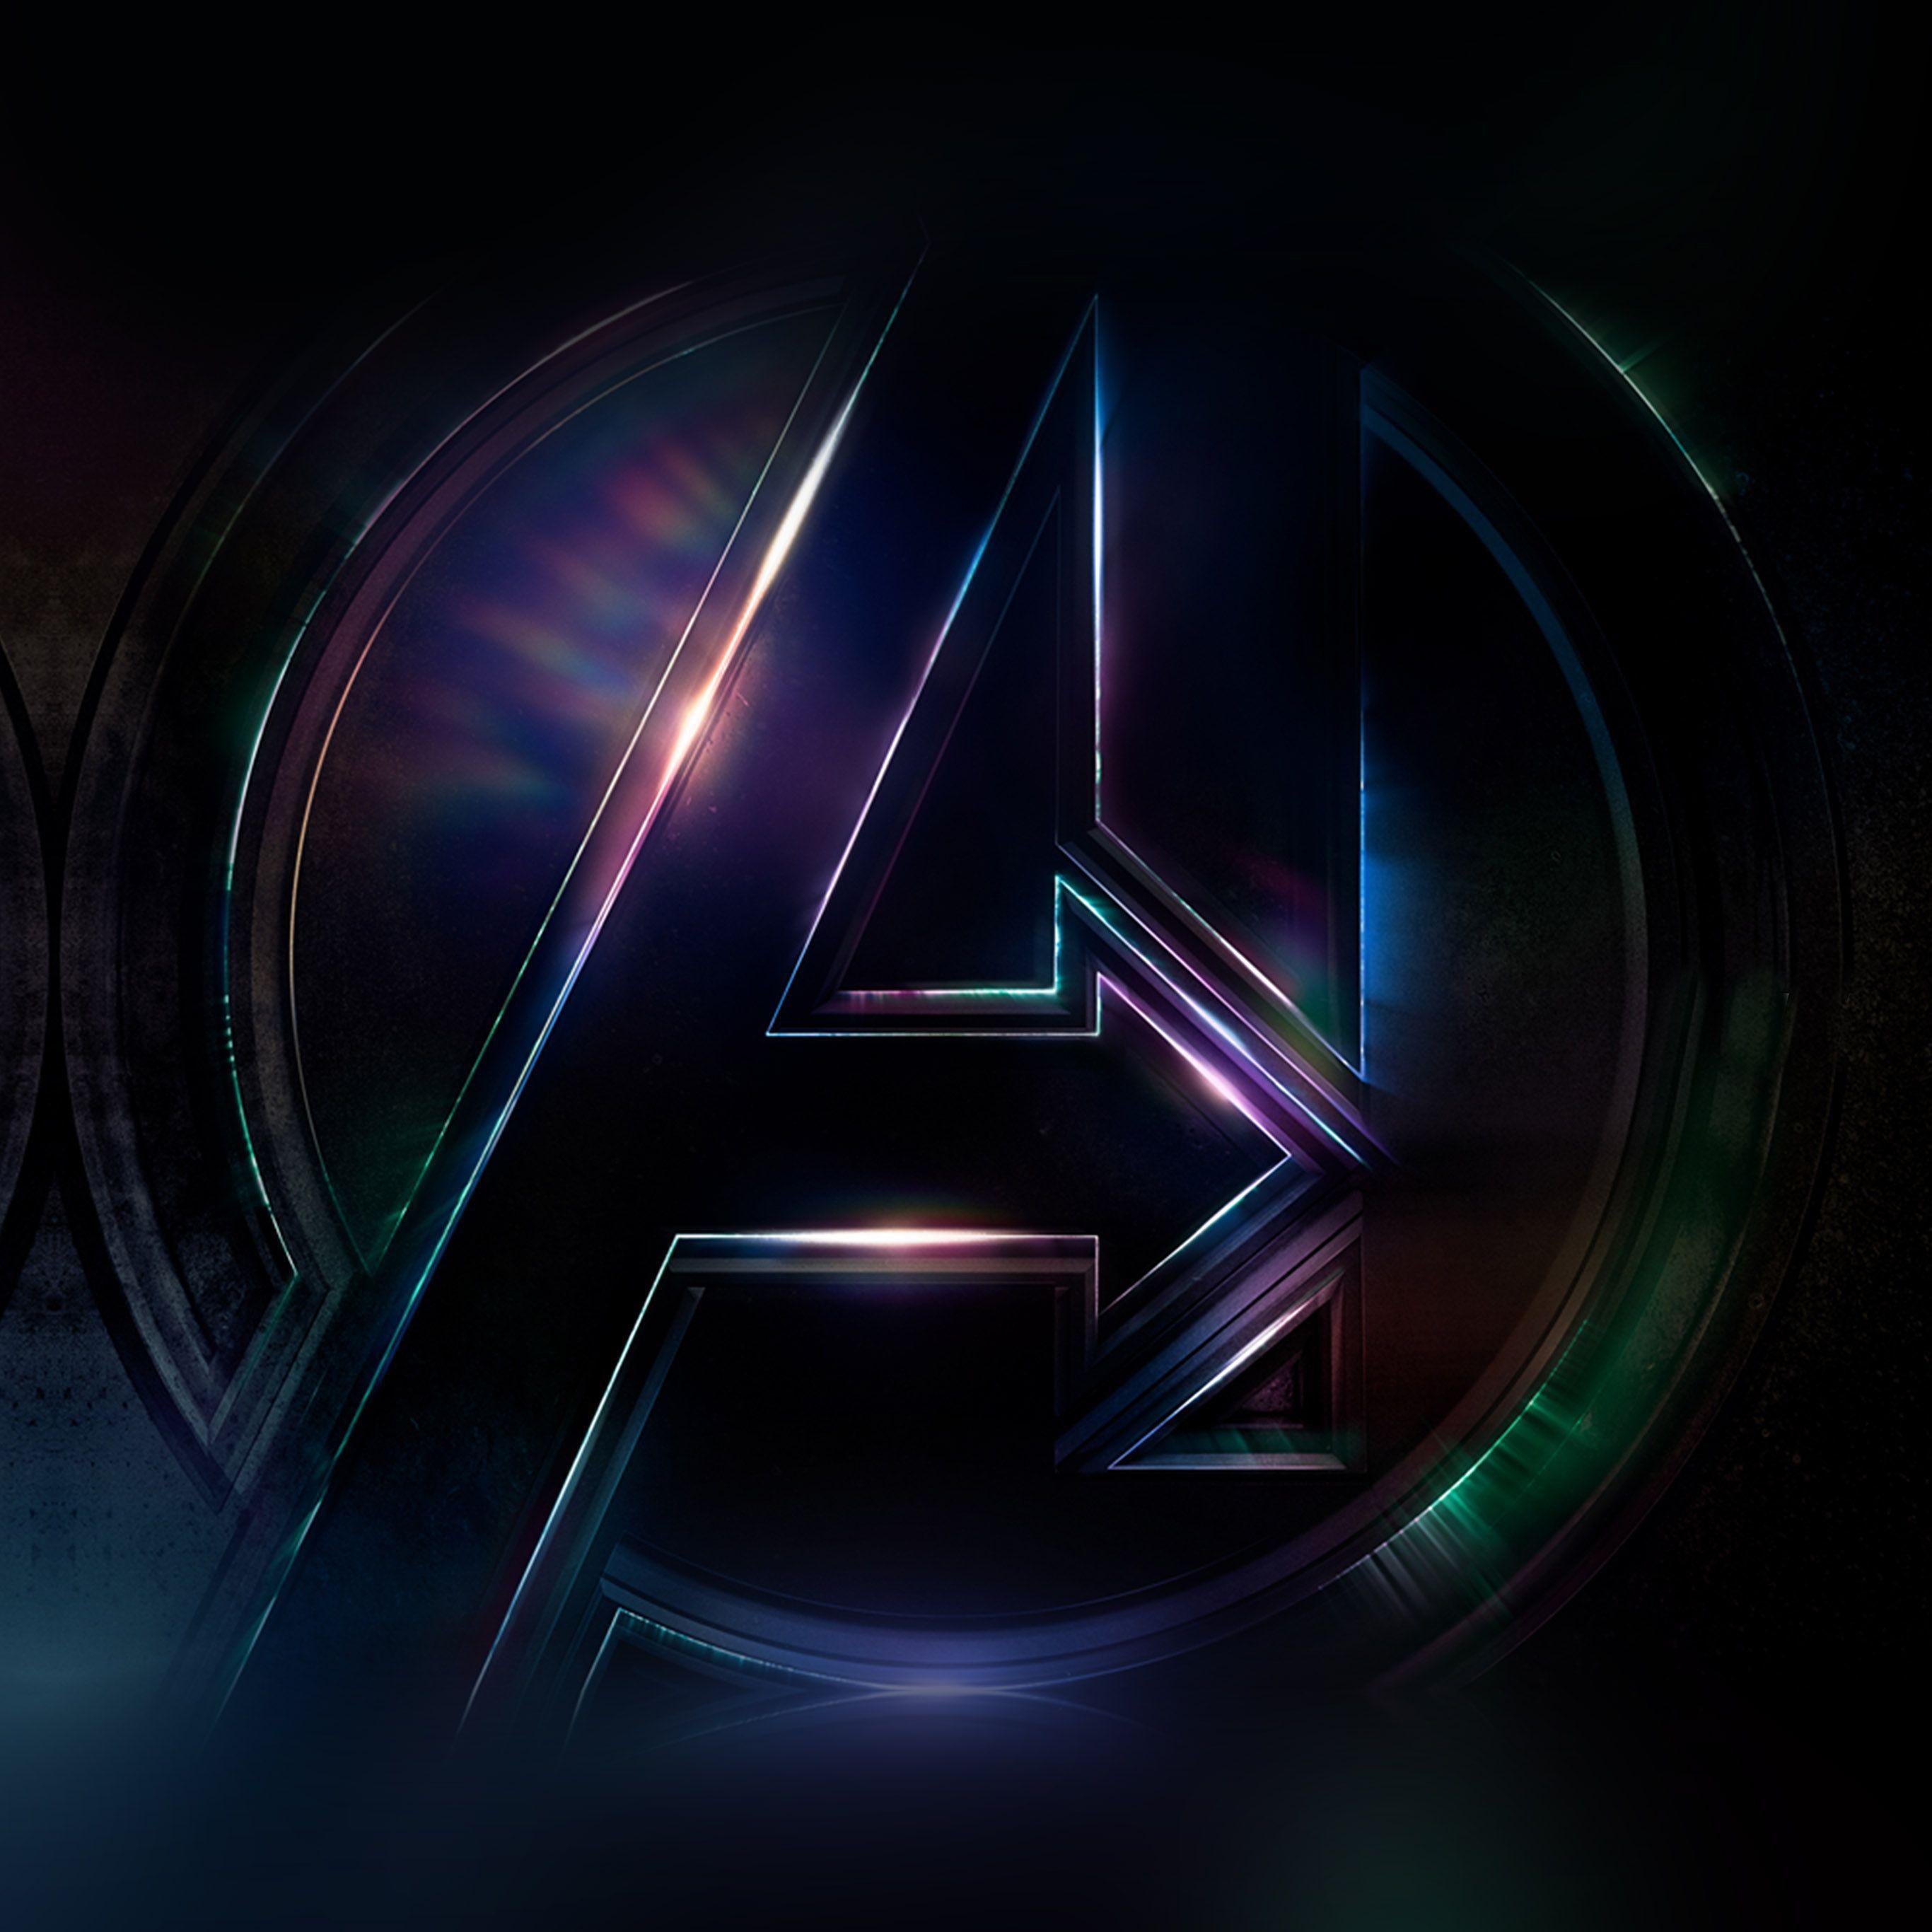 2732x2732 Hình nền Logo Marvel Avengers - Nền Logo Marvel Avengers miễn phí hàng đầu - Logo Avengers, Hình nền Avengers, Nghệ thuật phim